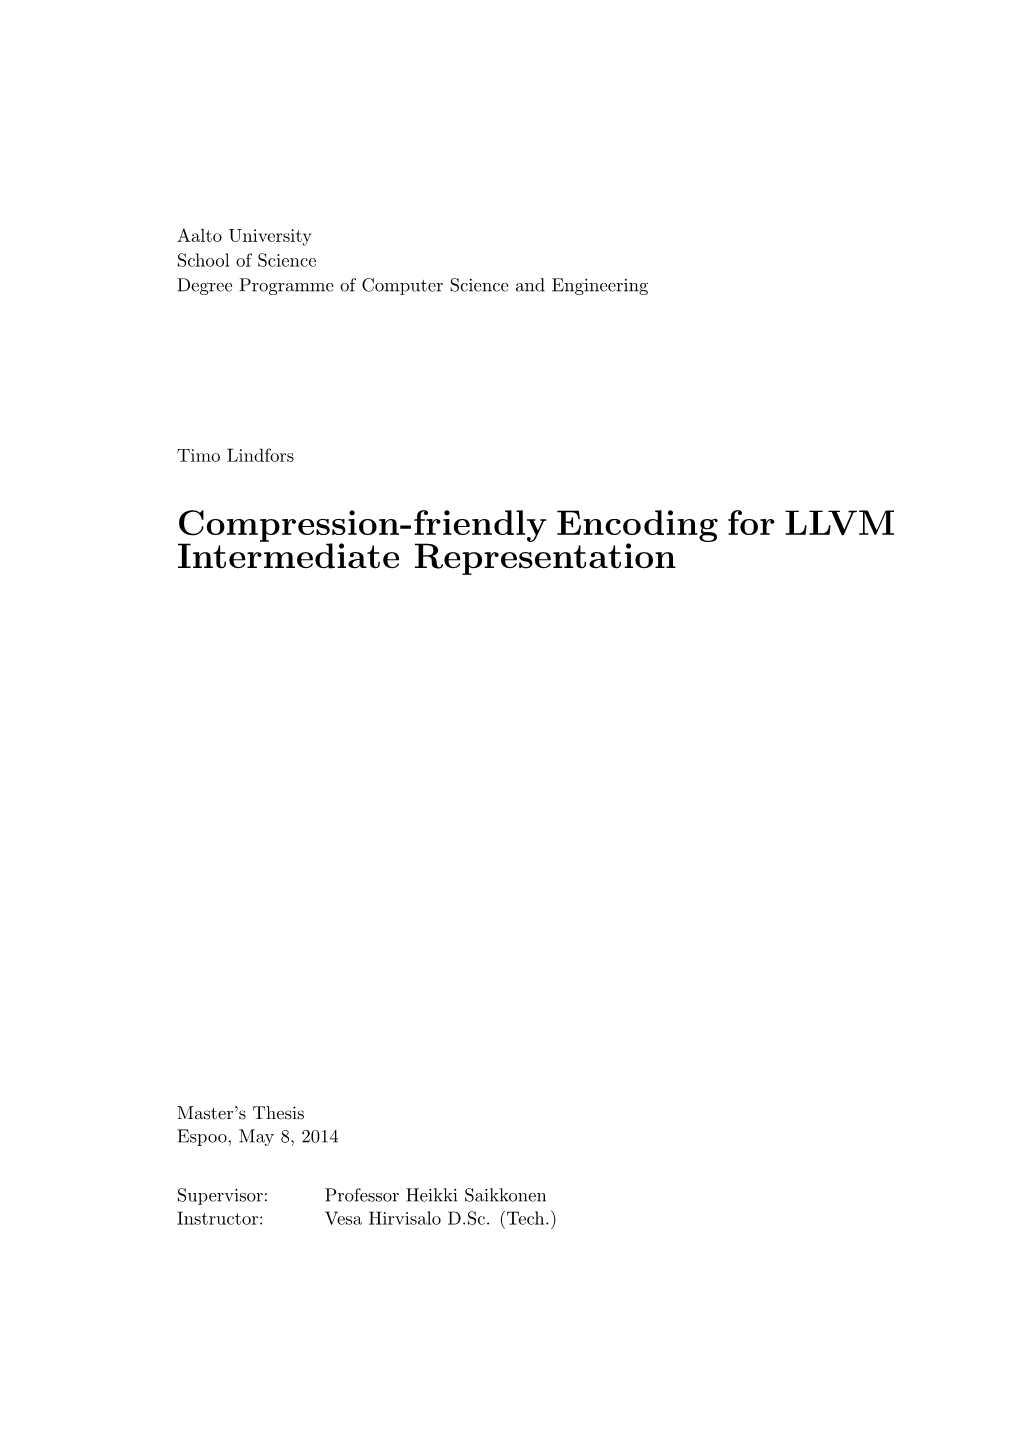 Compression-Friendly Encoding for LLVM Intermediate Representation